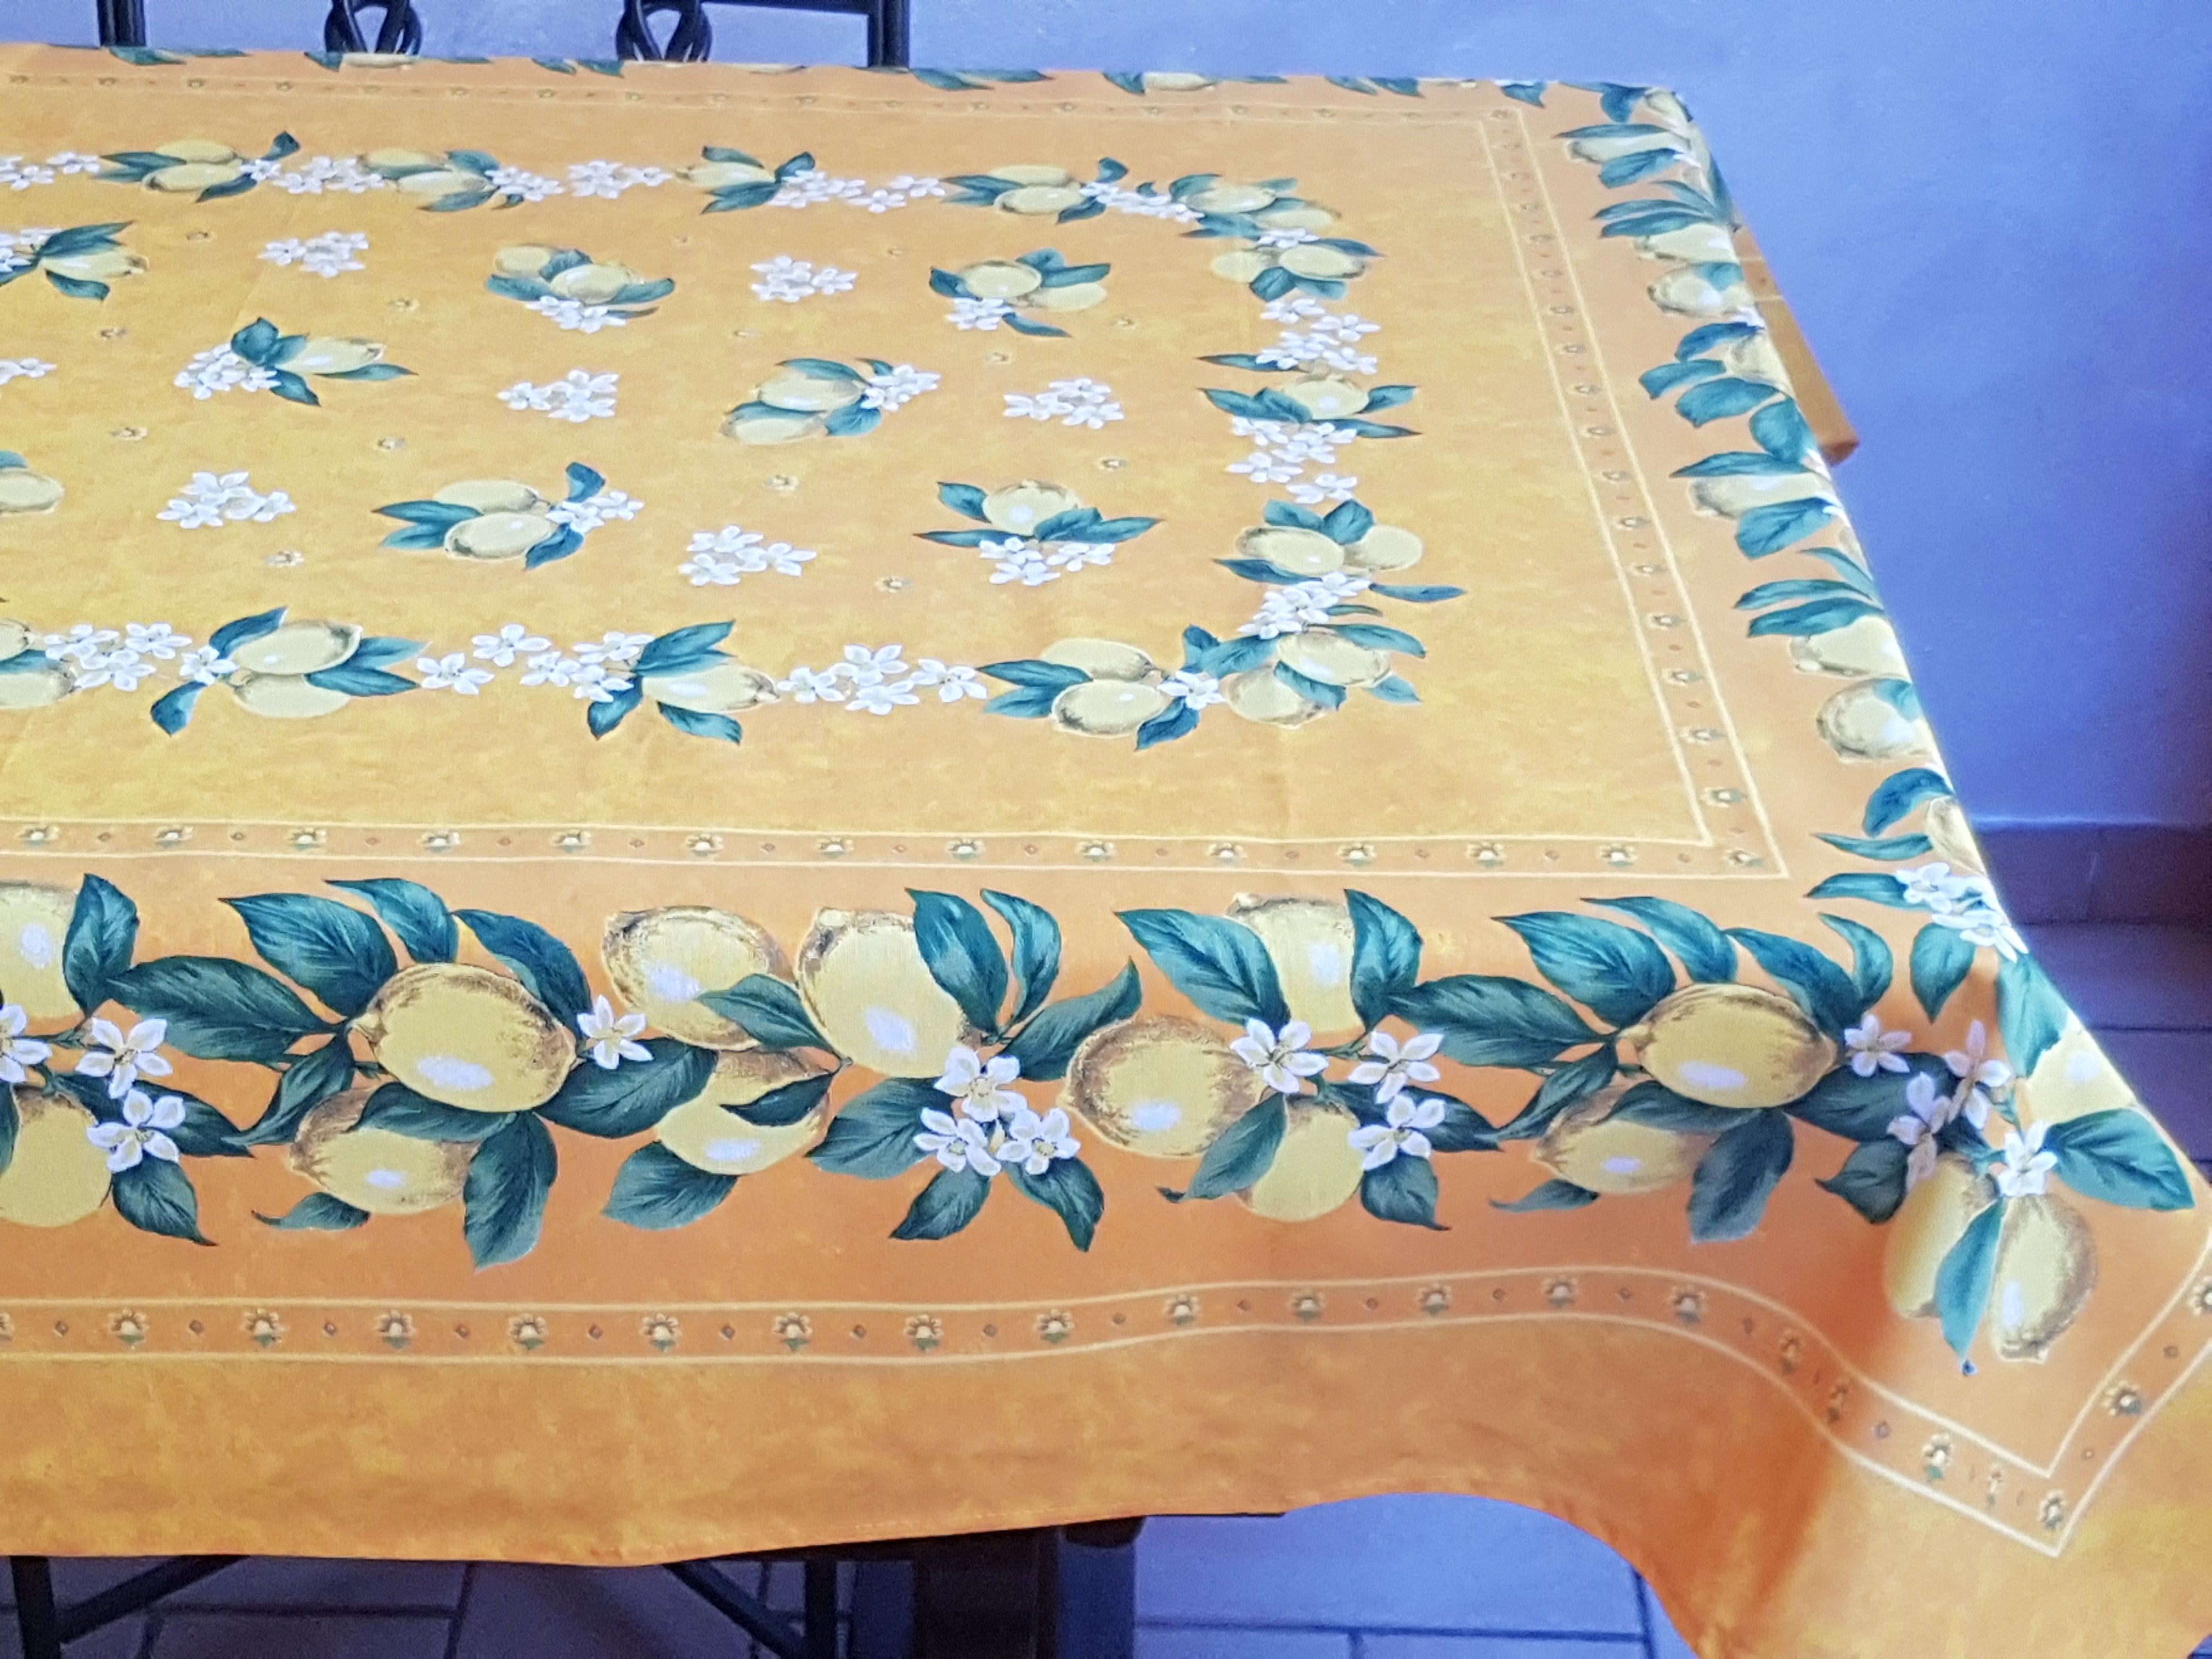 Provencal Tablecloth Lemon Yellow Background